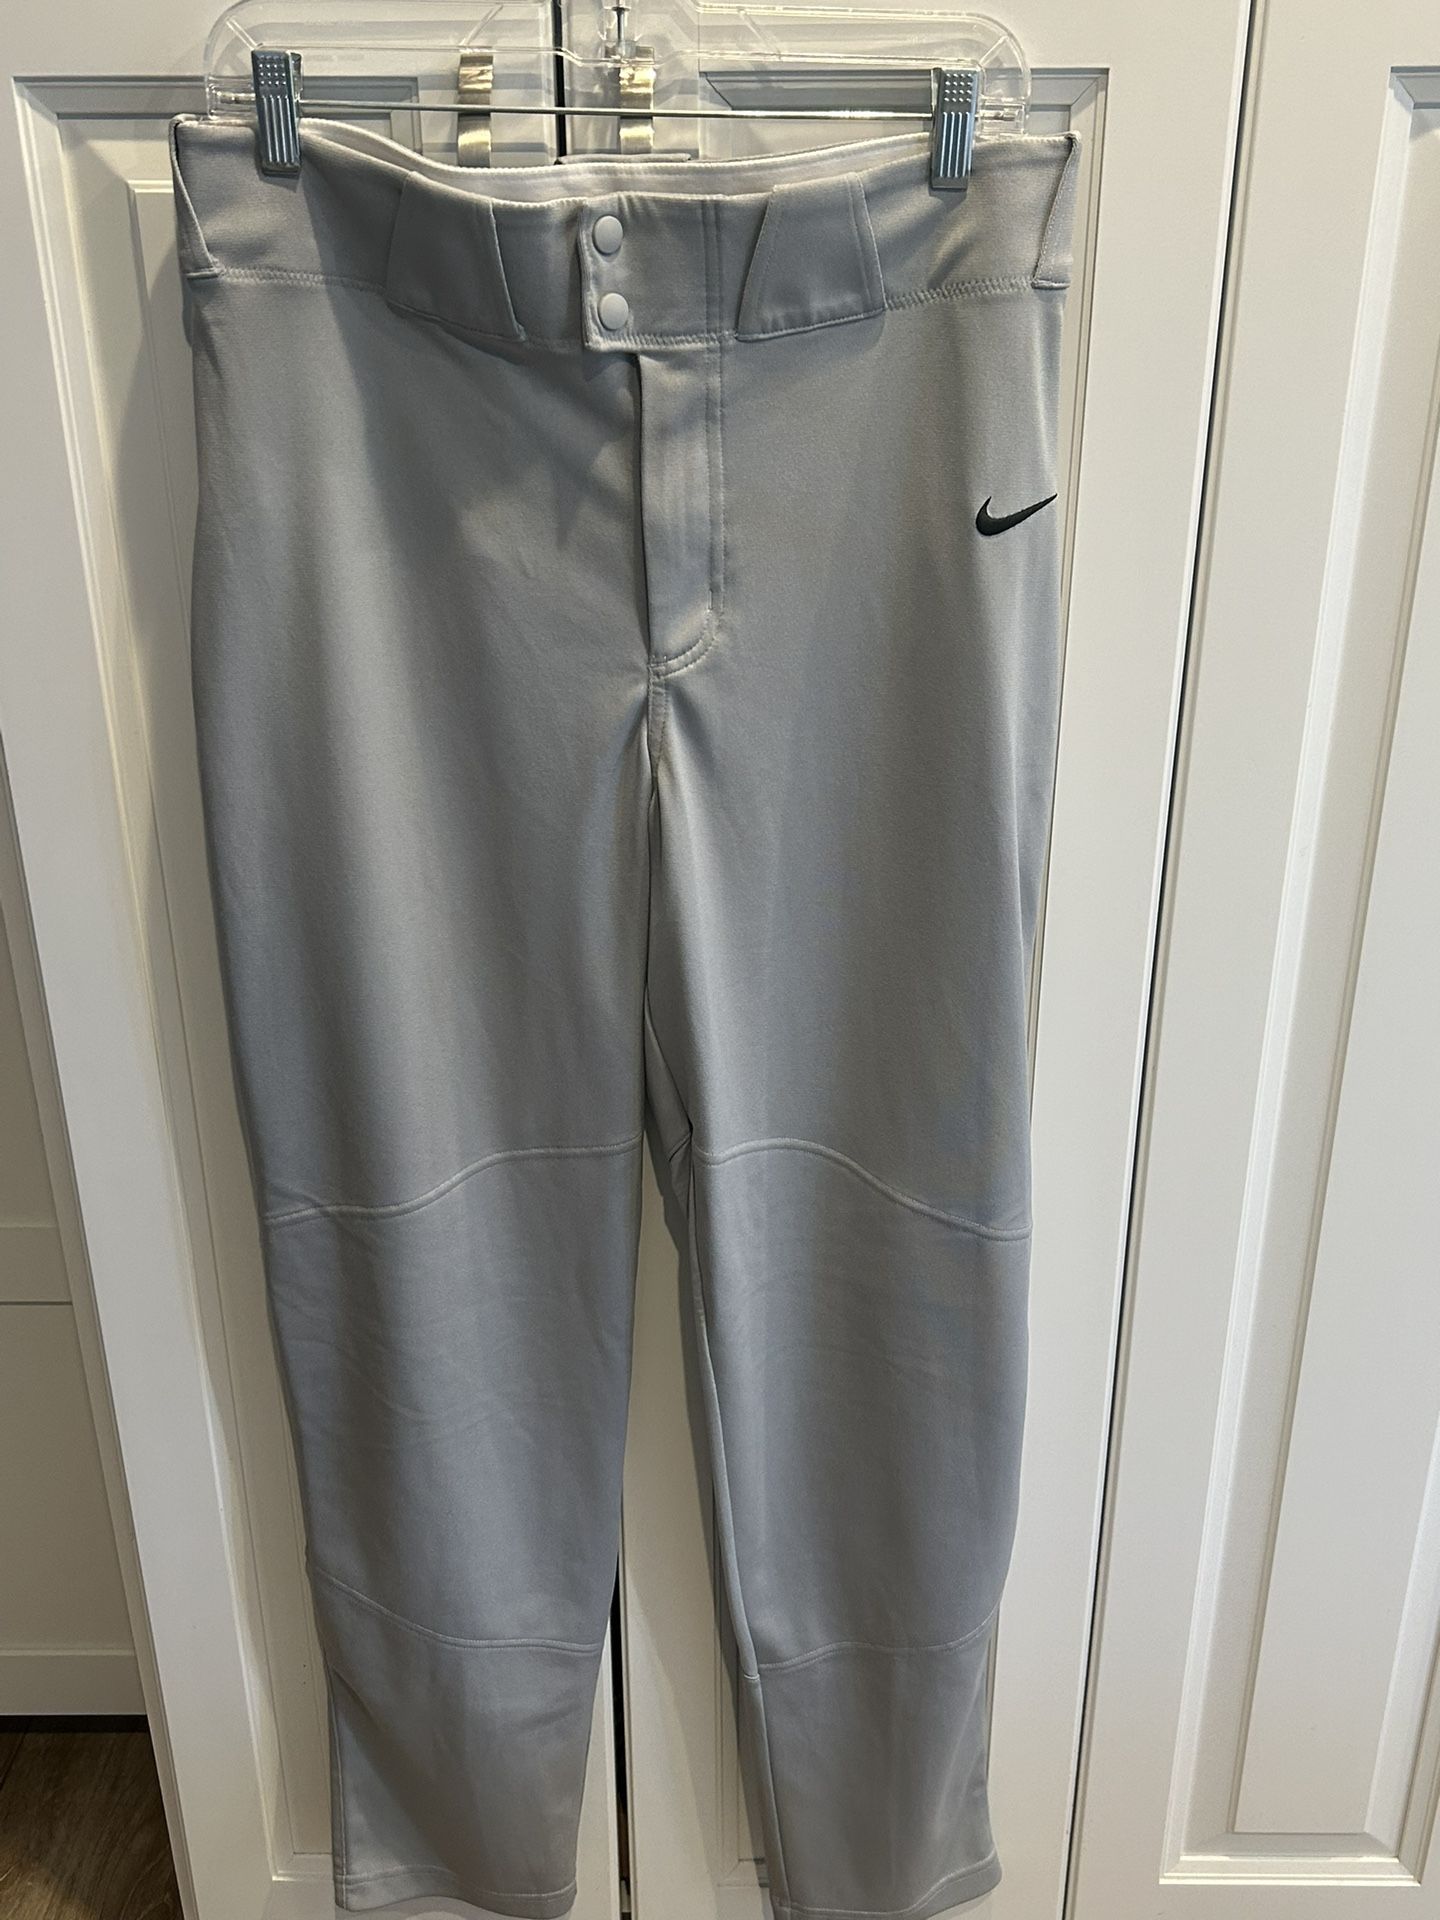 Nike Baseball Pants - Men’s Size large- Gray